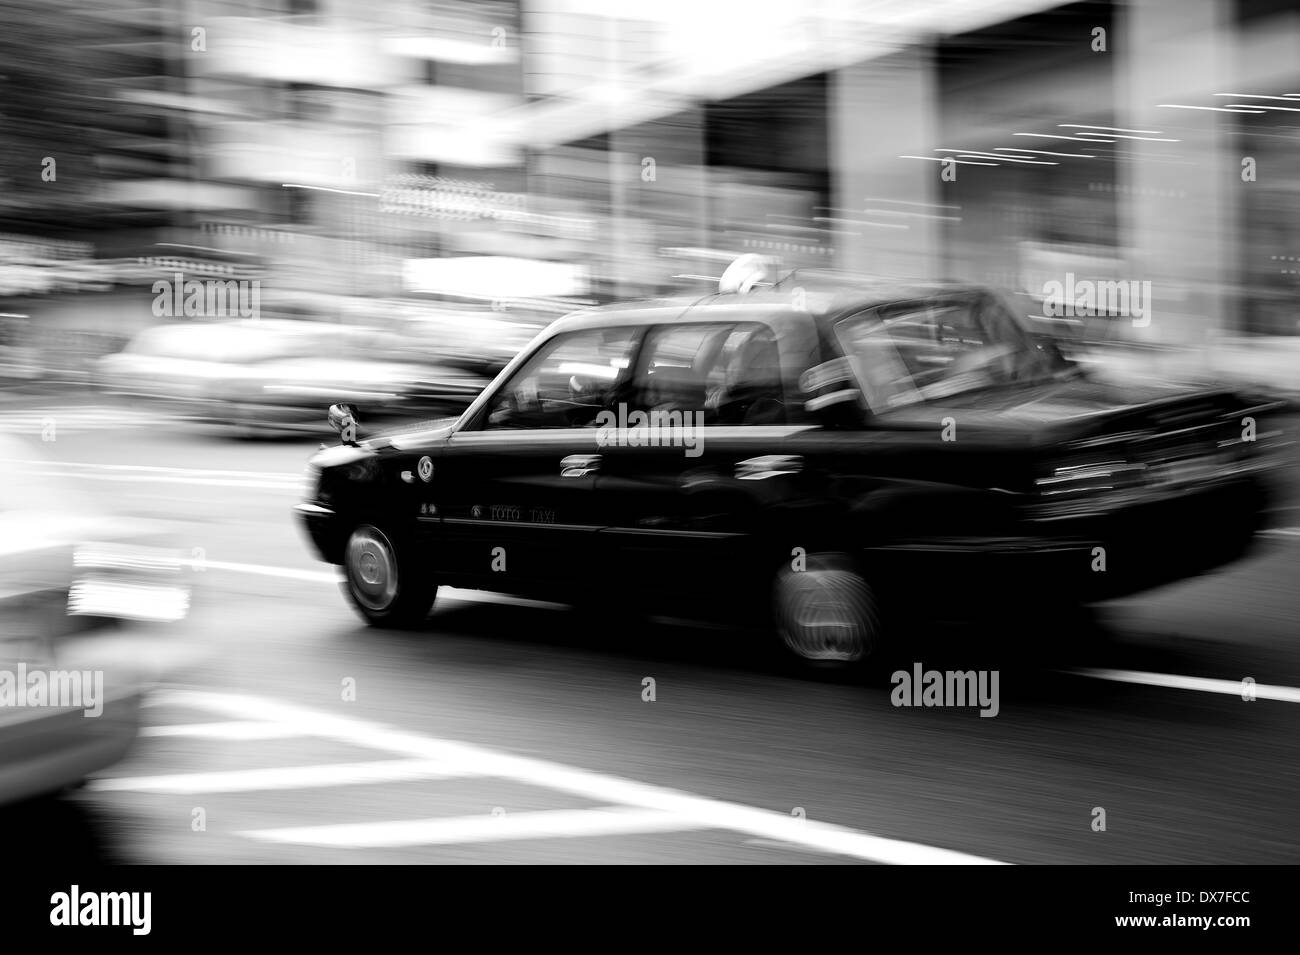 Taxi In Shibuya, Tokyo, Japan Stock Photo